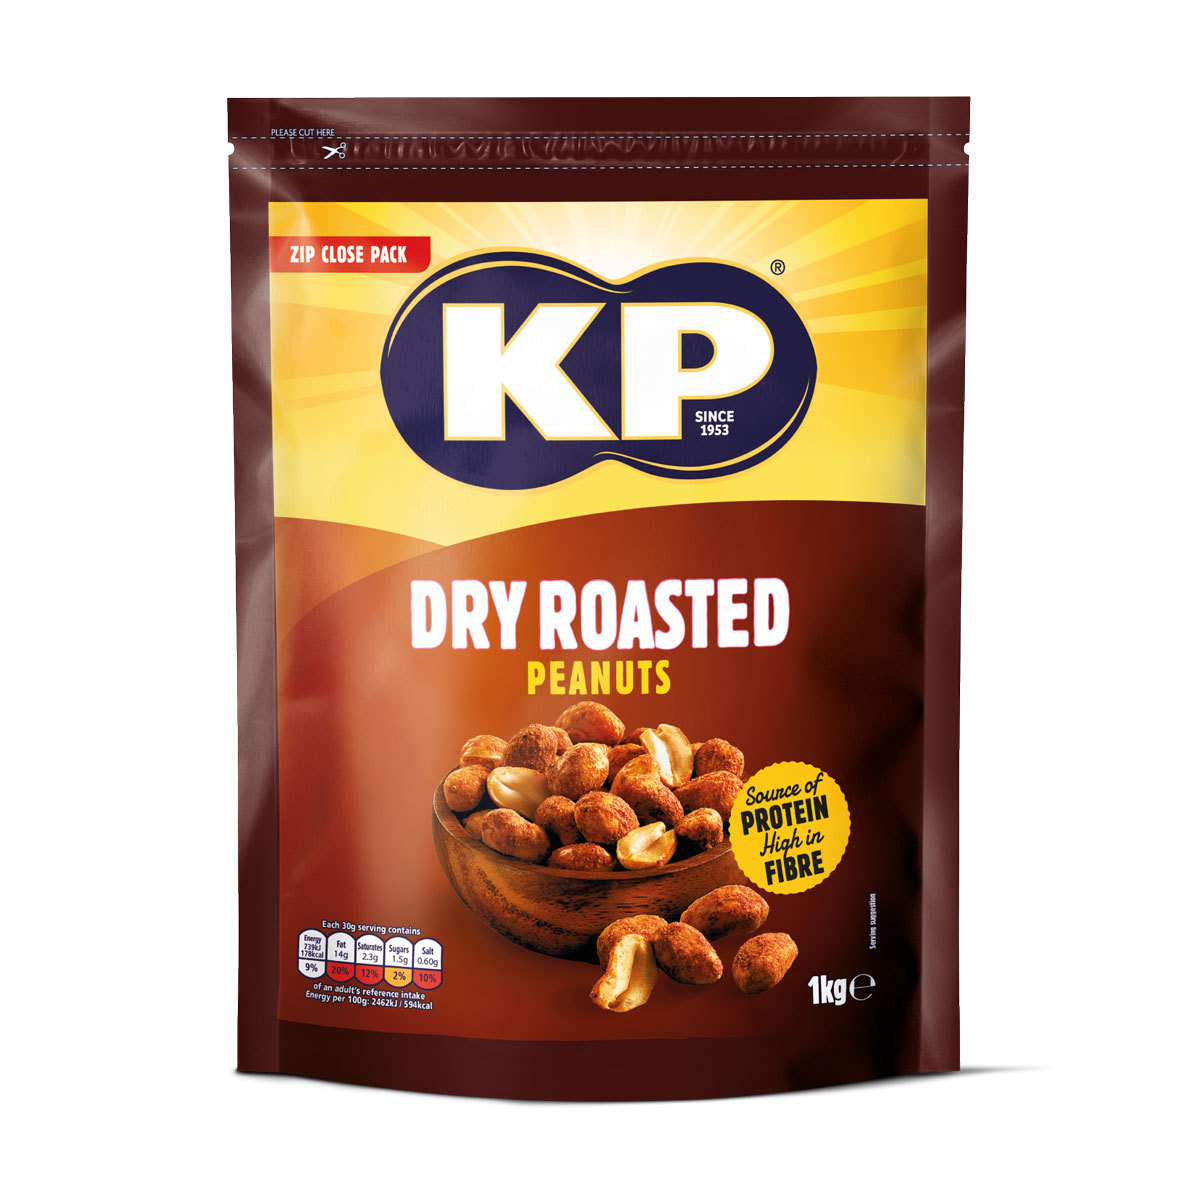 Pack of KP Dry Roasted Peanuts in zip close pack